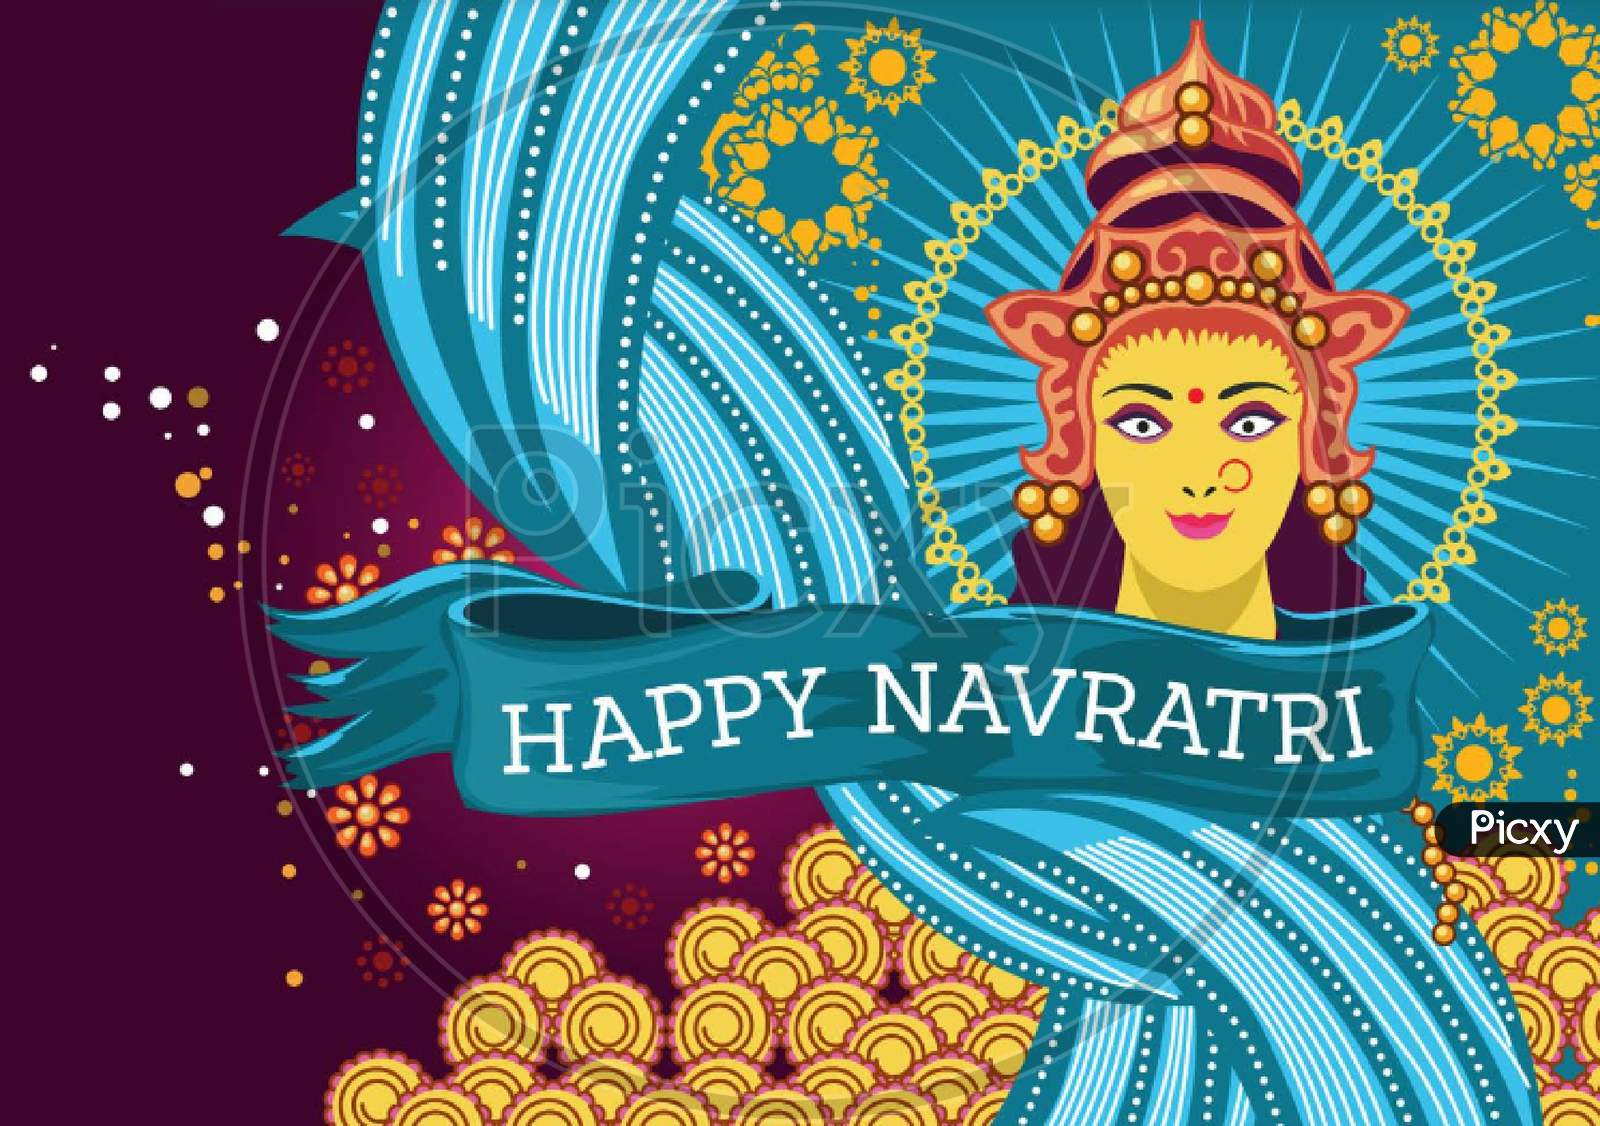 Happy navaratri